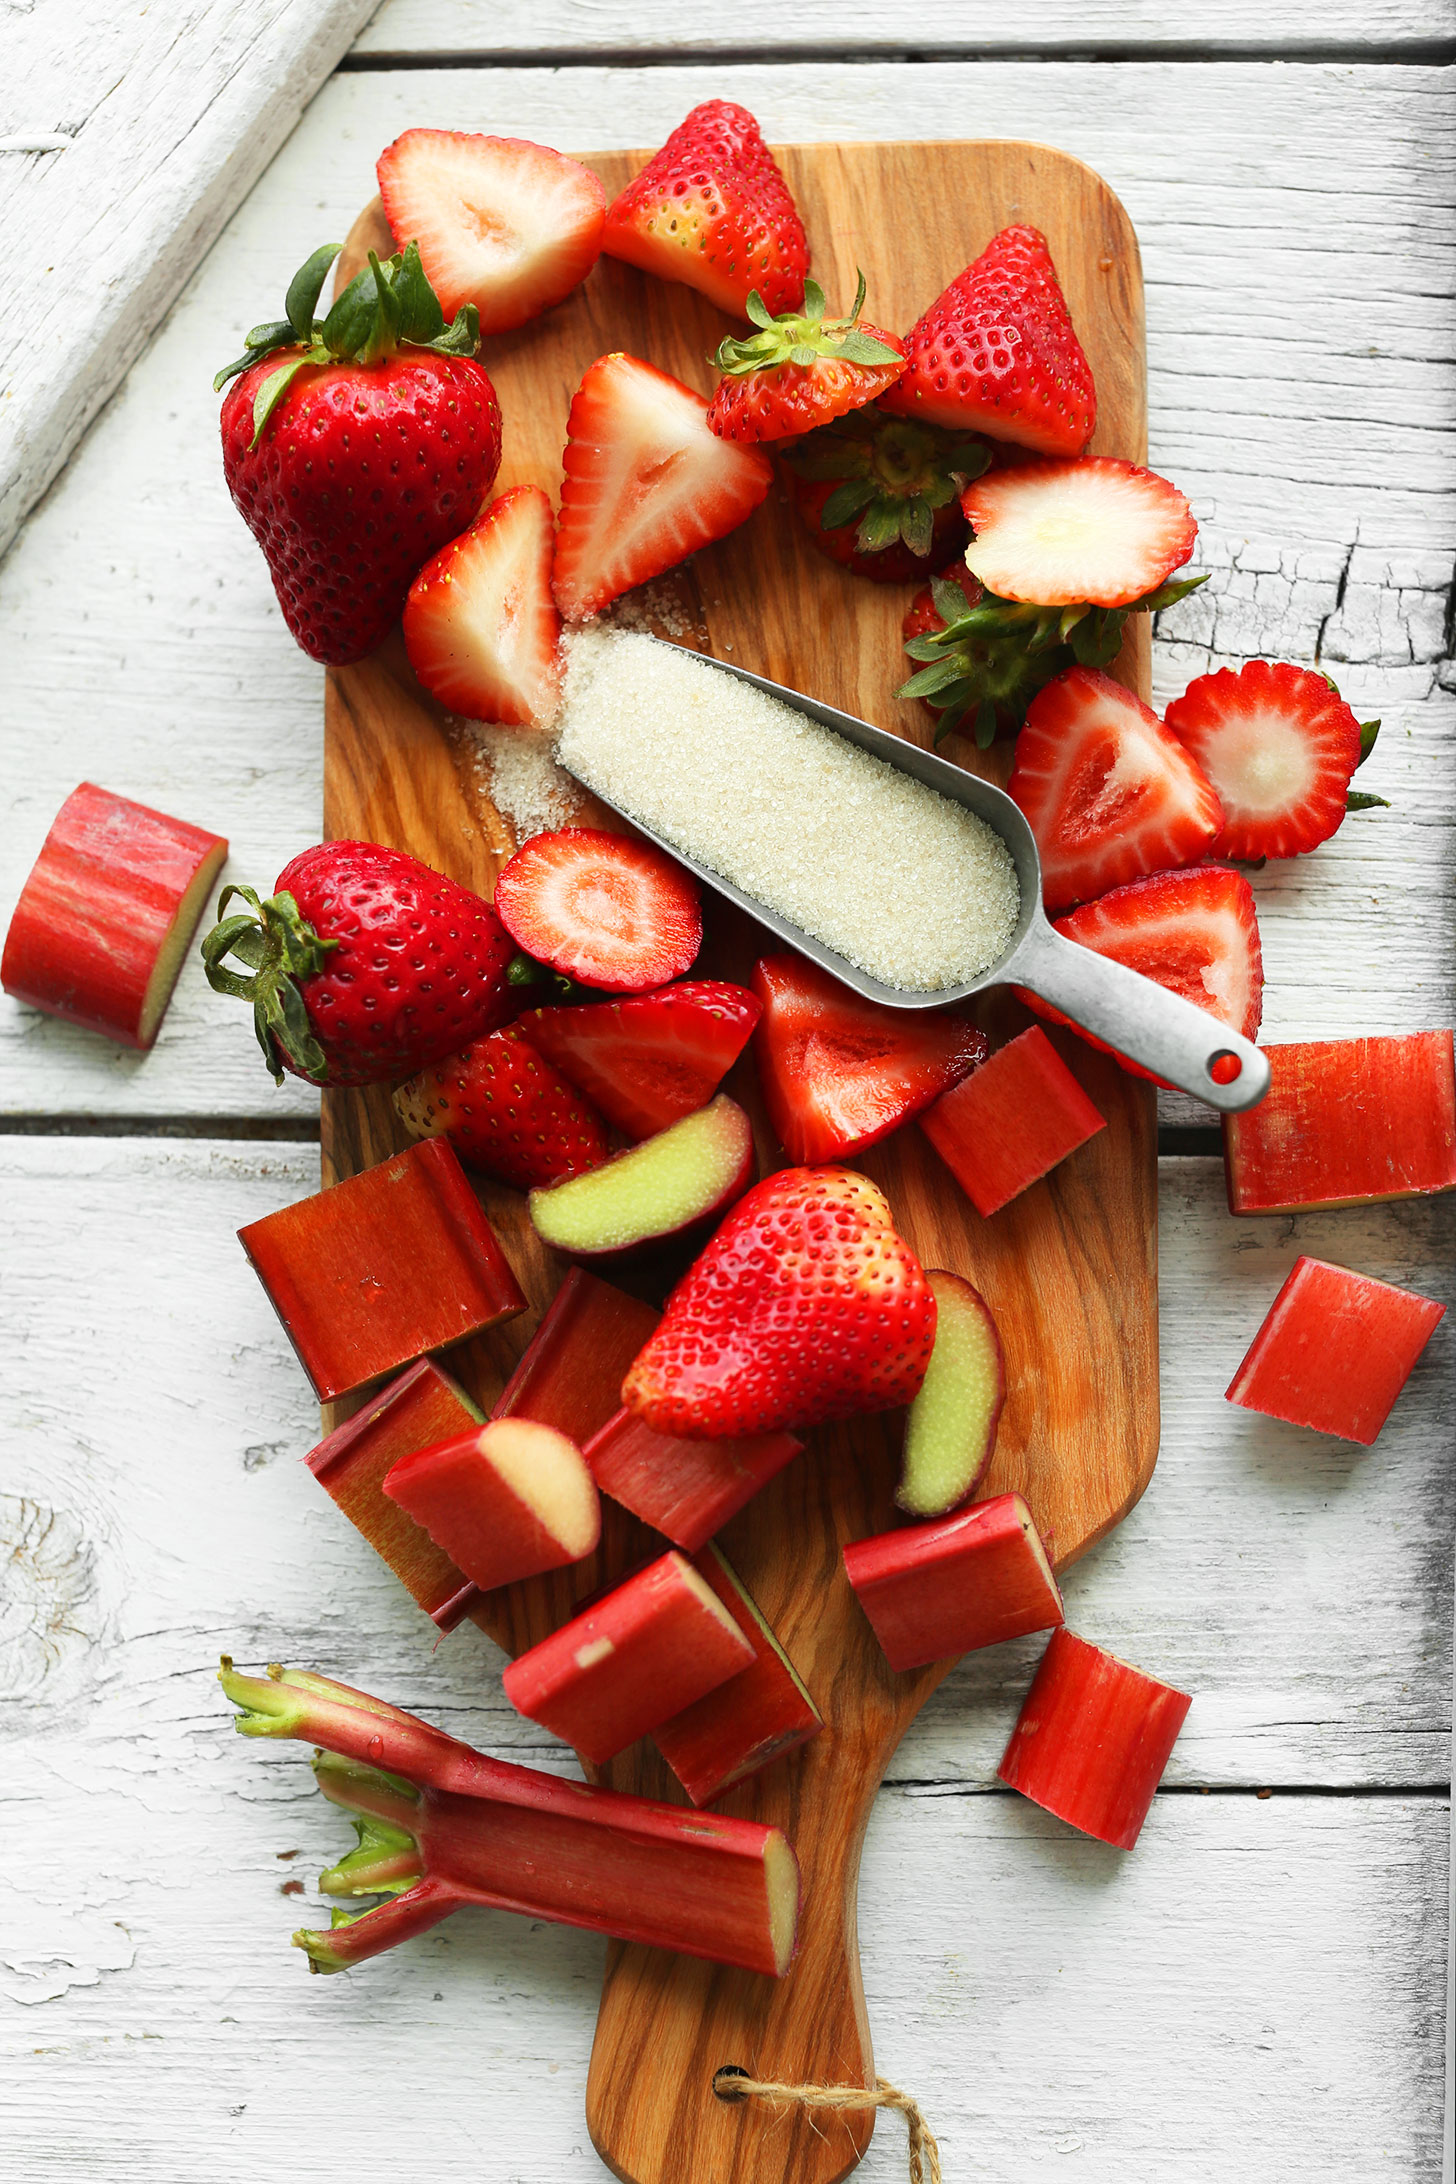 Wood cutting board with sugar, strawberries, and fresh rhubarb for making homemade strawberry rhubarb margaritas